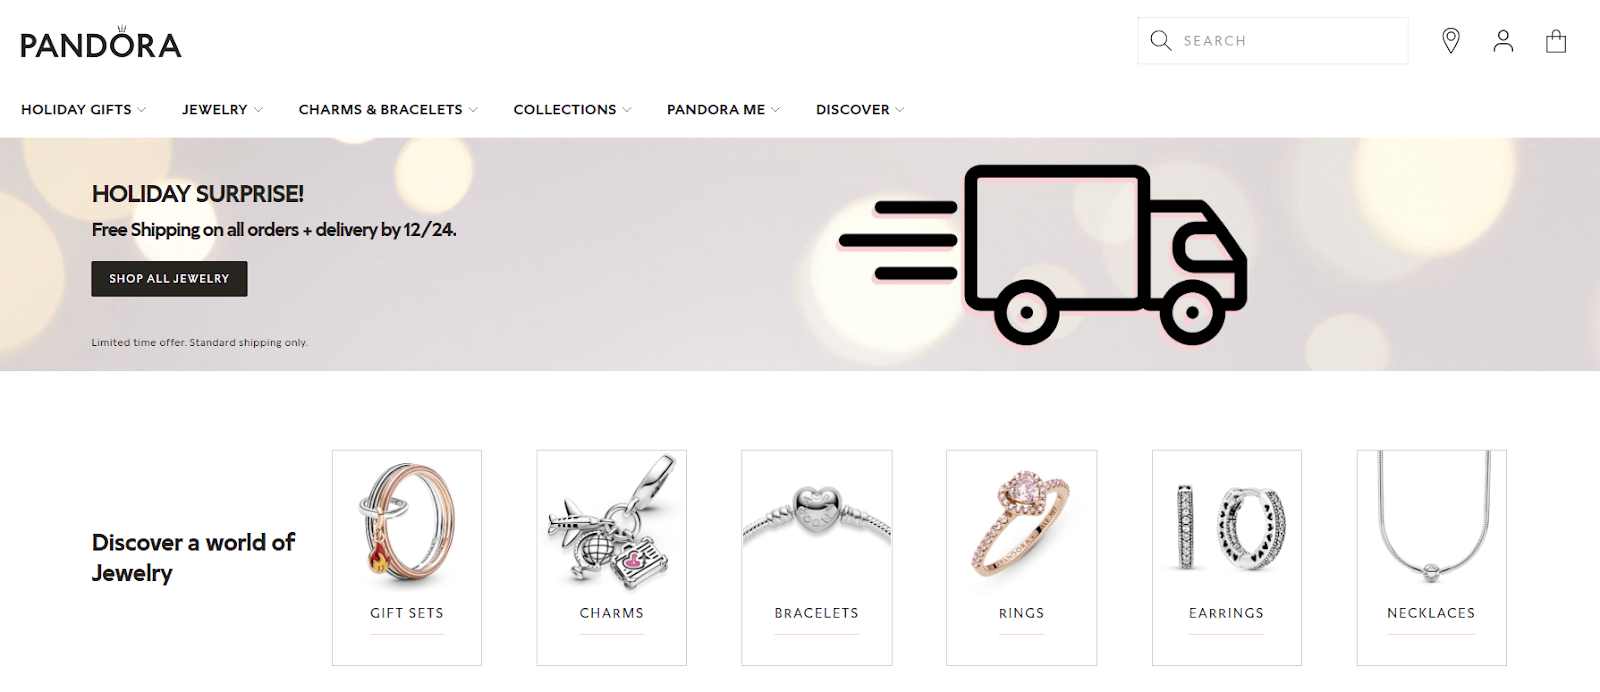 Sada Du bliver bedre Cusco Pandora Stock Is Cheap, Online Jewelry Is Trending (OTCMKTS:PANDY) |  Seeking Alpha